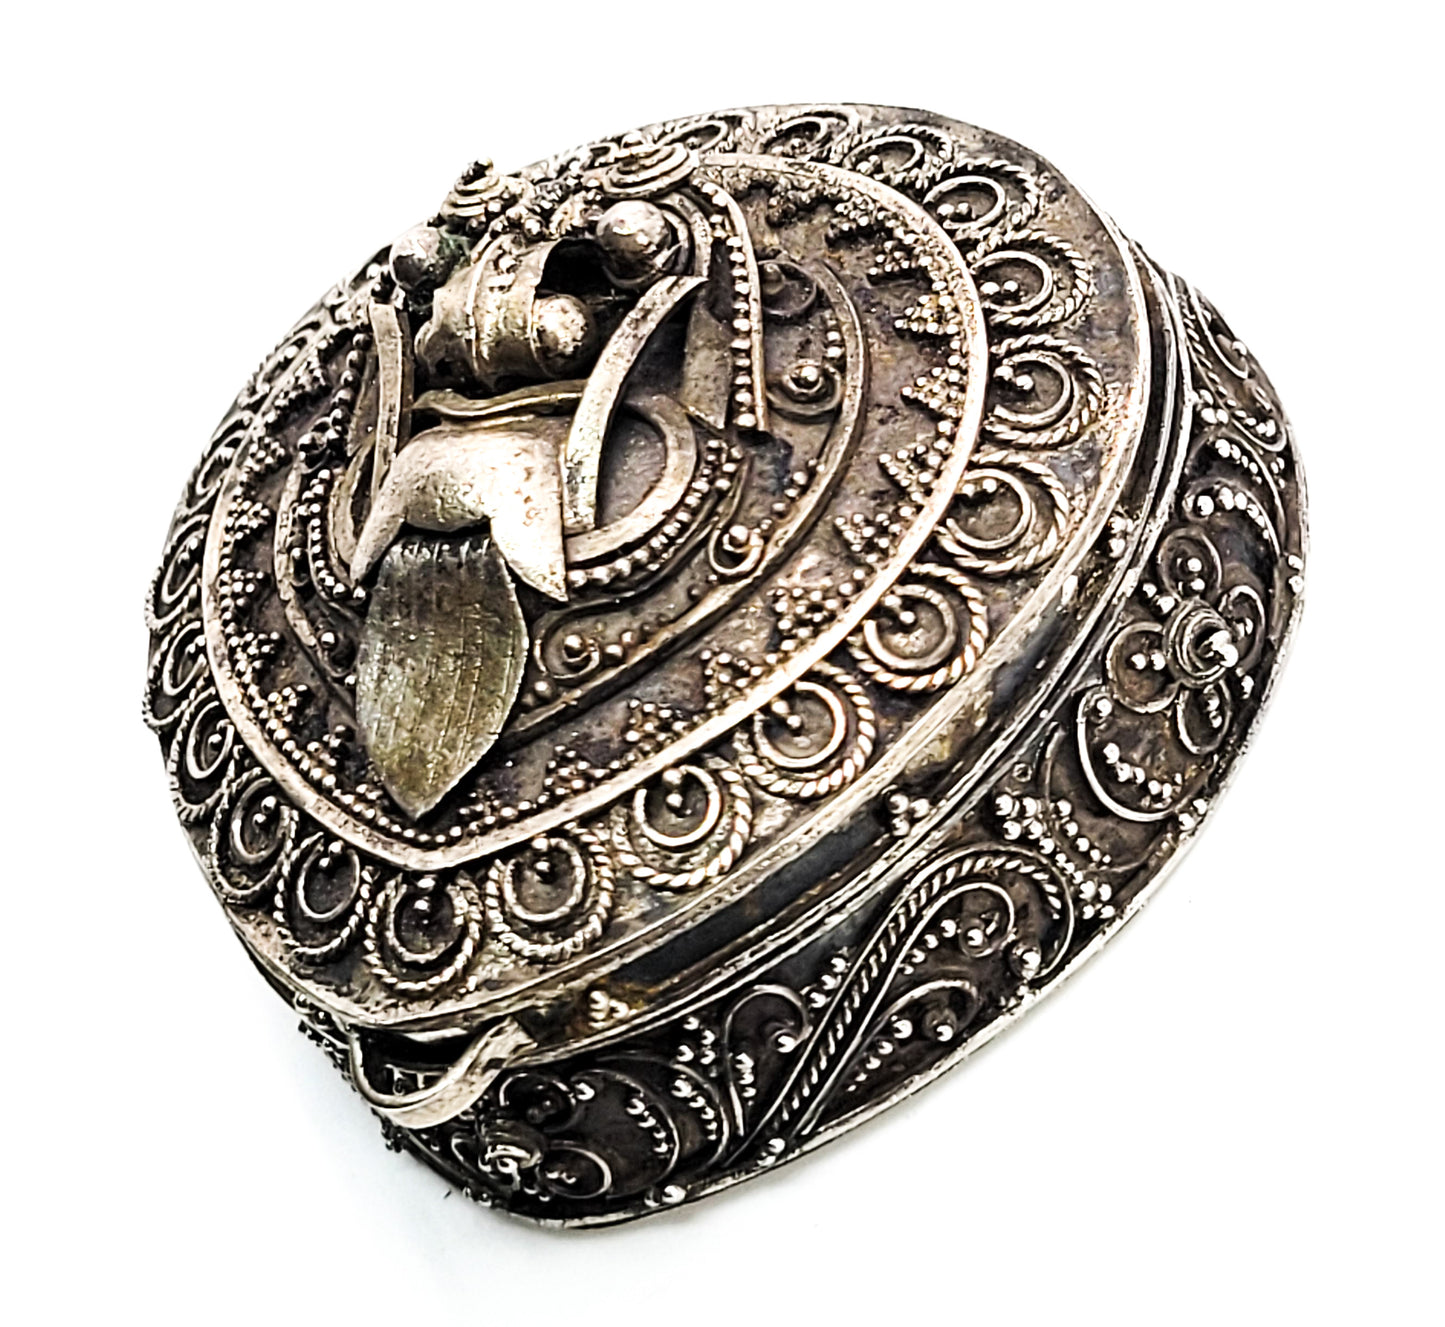 Rangda Balinese demon Queen Large mask sterling silver vintage trinket box jewelry